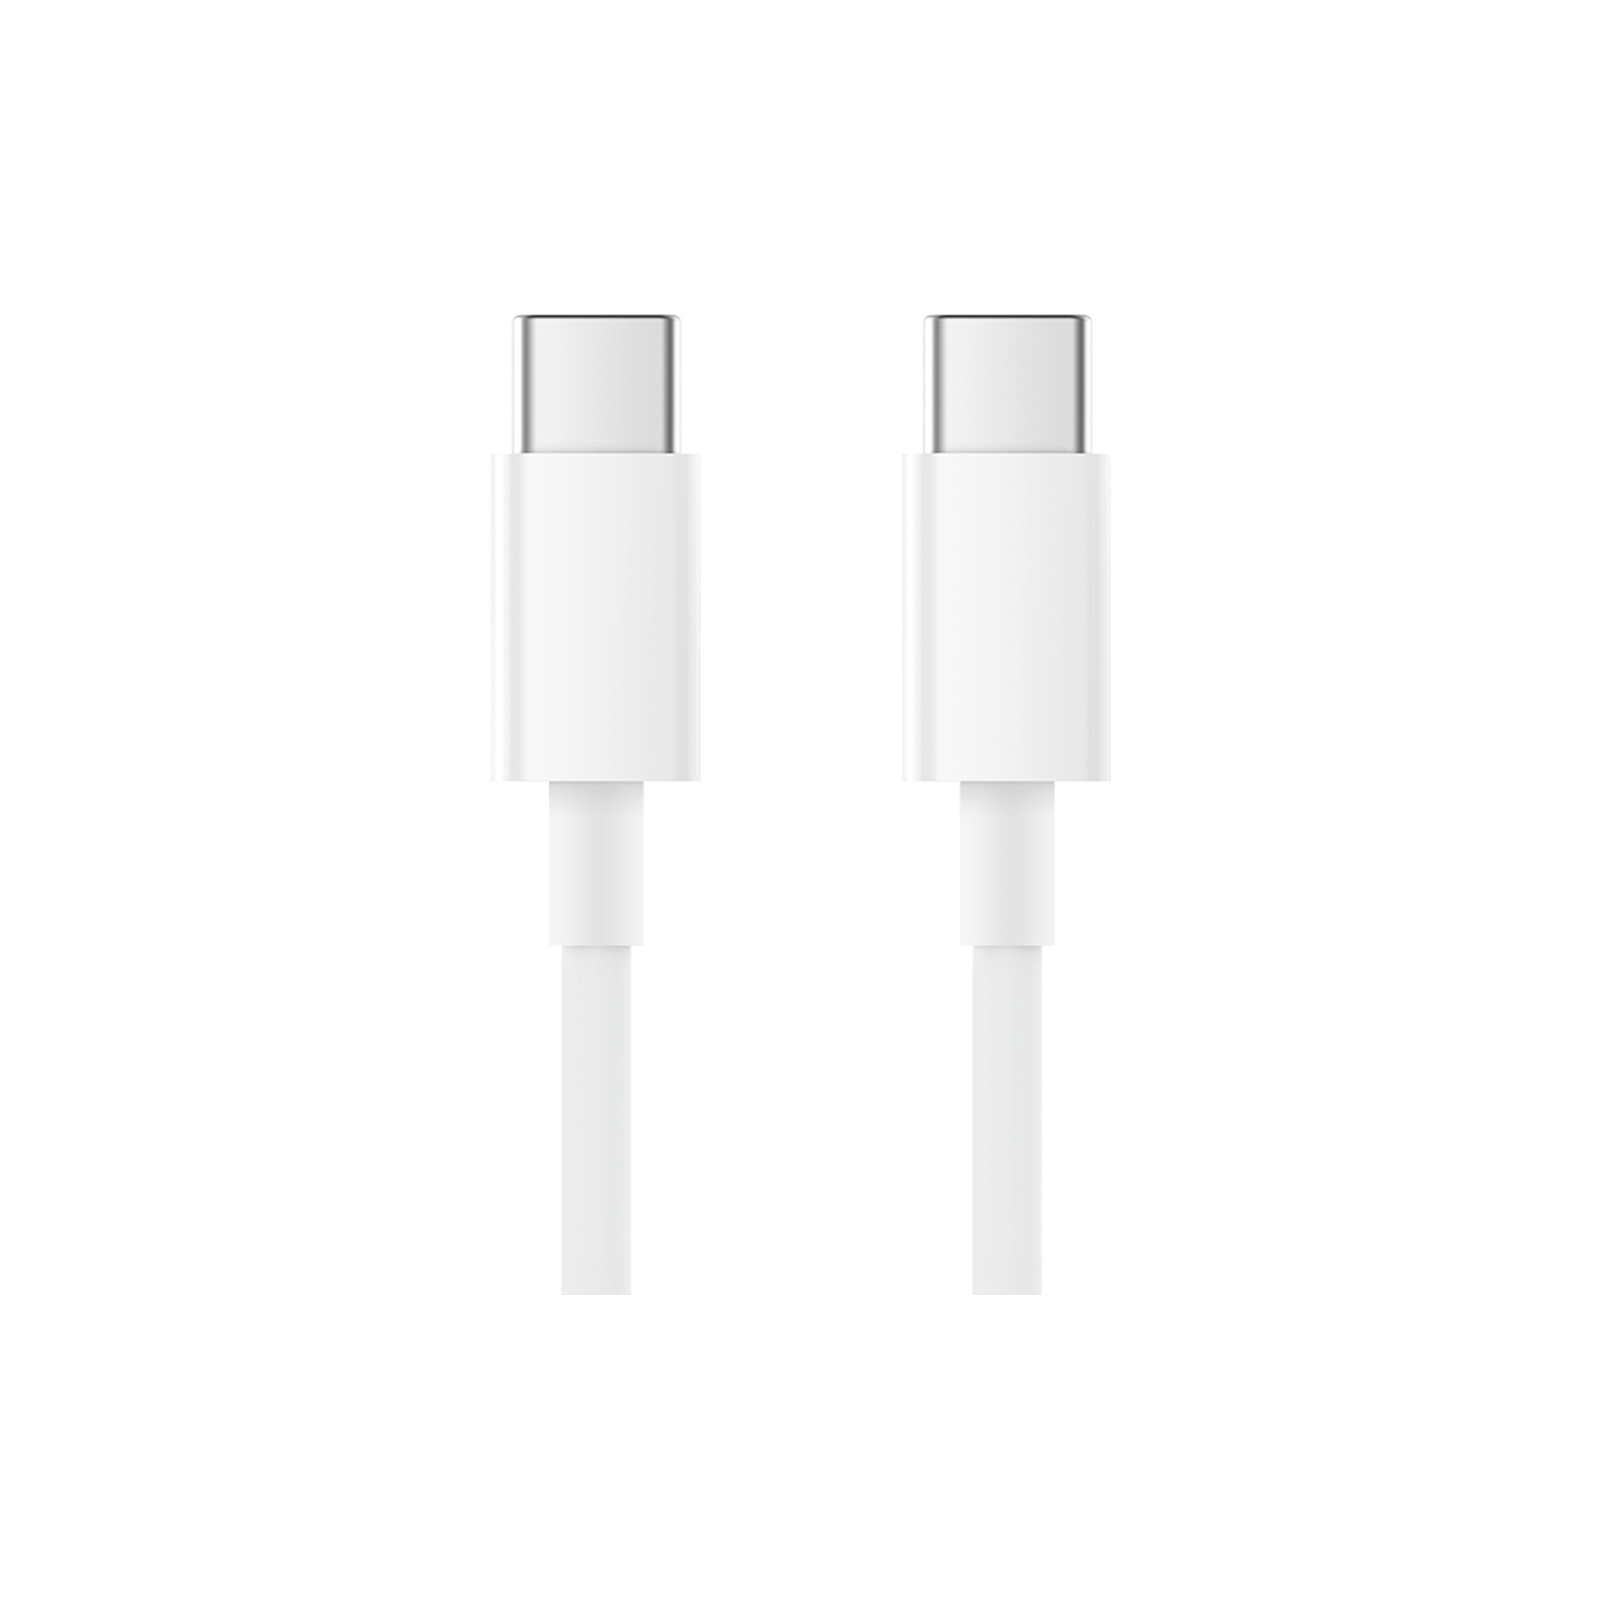 Mi USB Type-C to Type-C Cable 150cm White 150cm